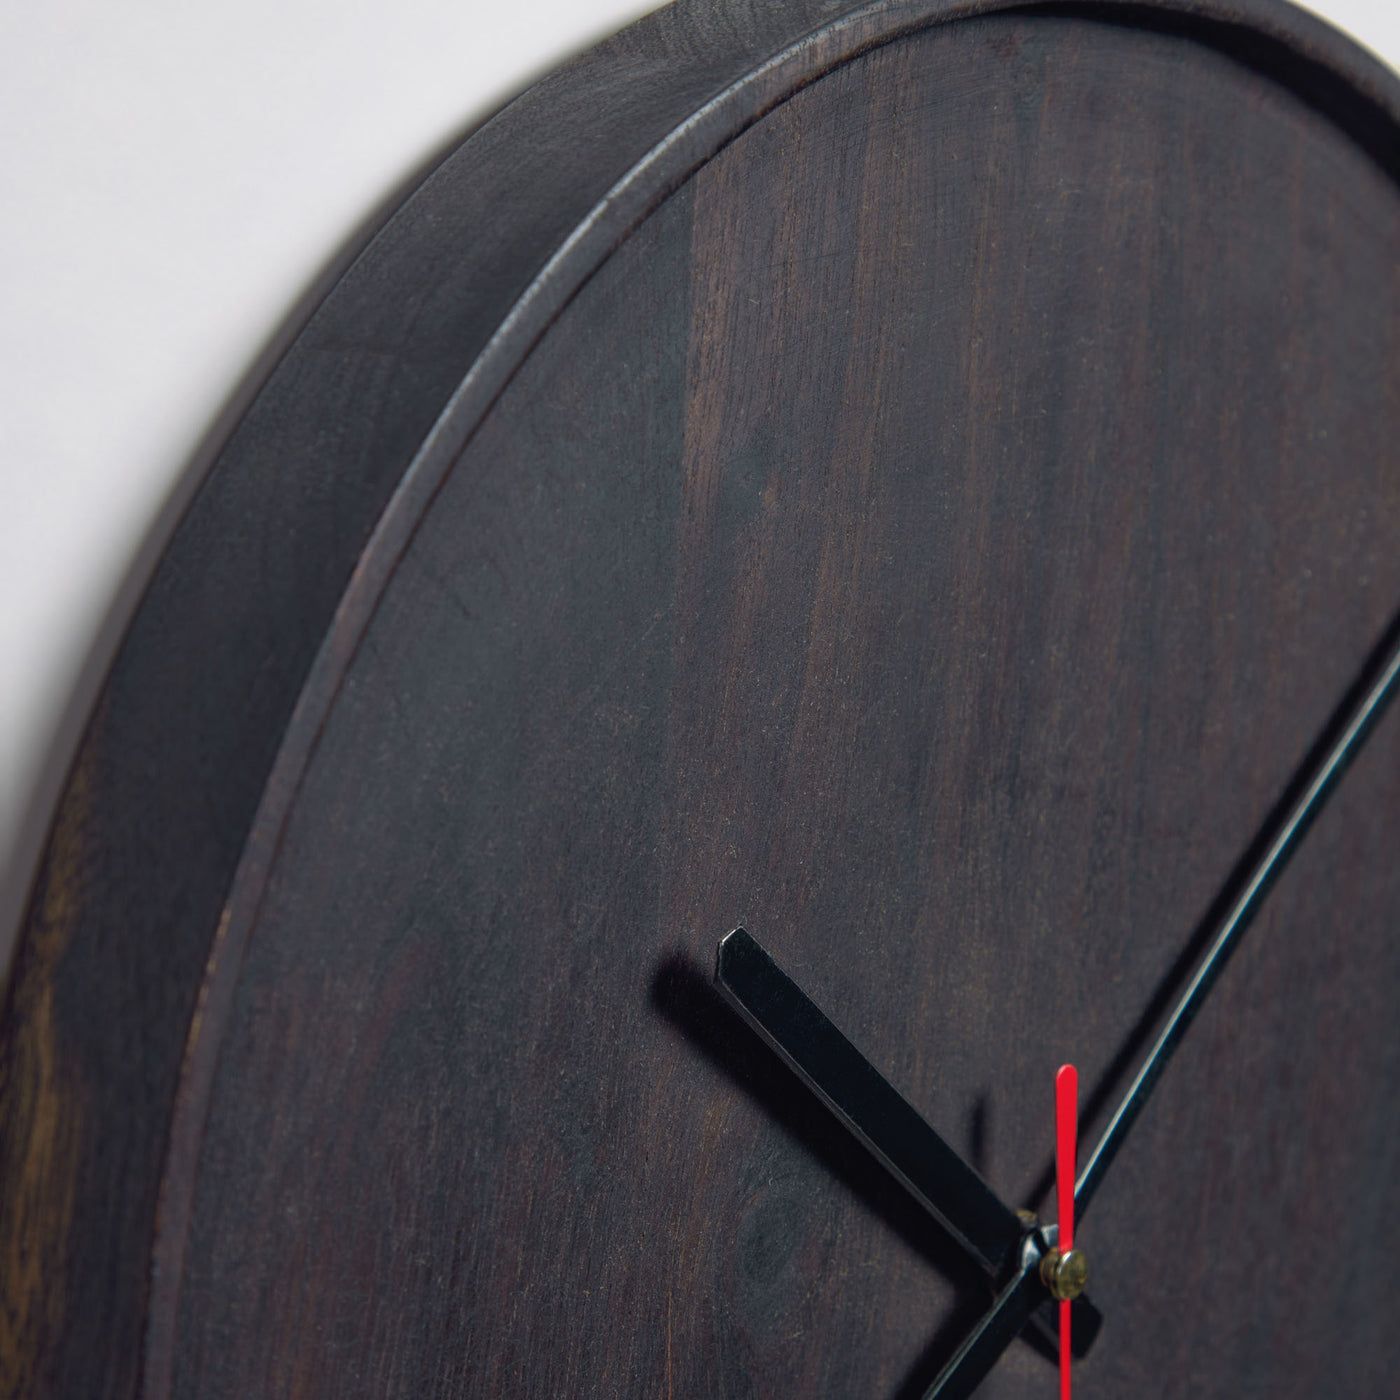 Reloj de pared redondo (acacia) de madera